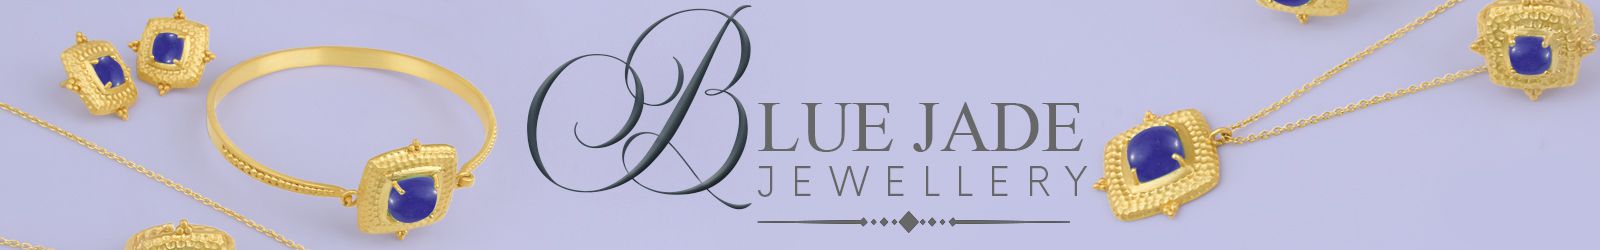 Silver Blue Jade Jewelry Wholesale Supplier